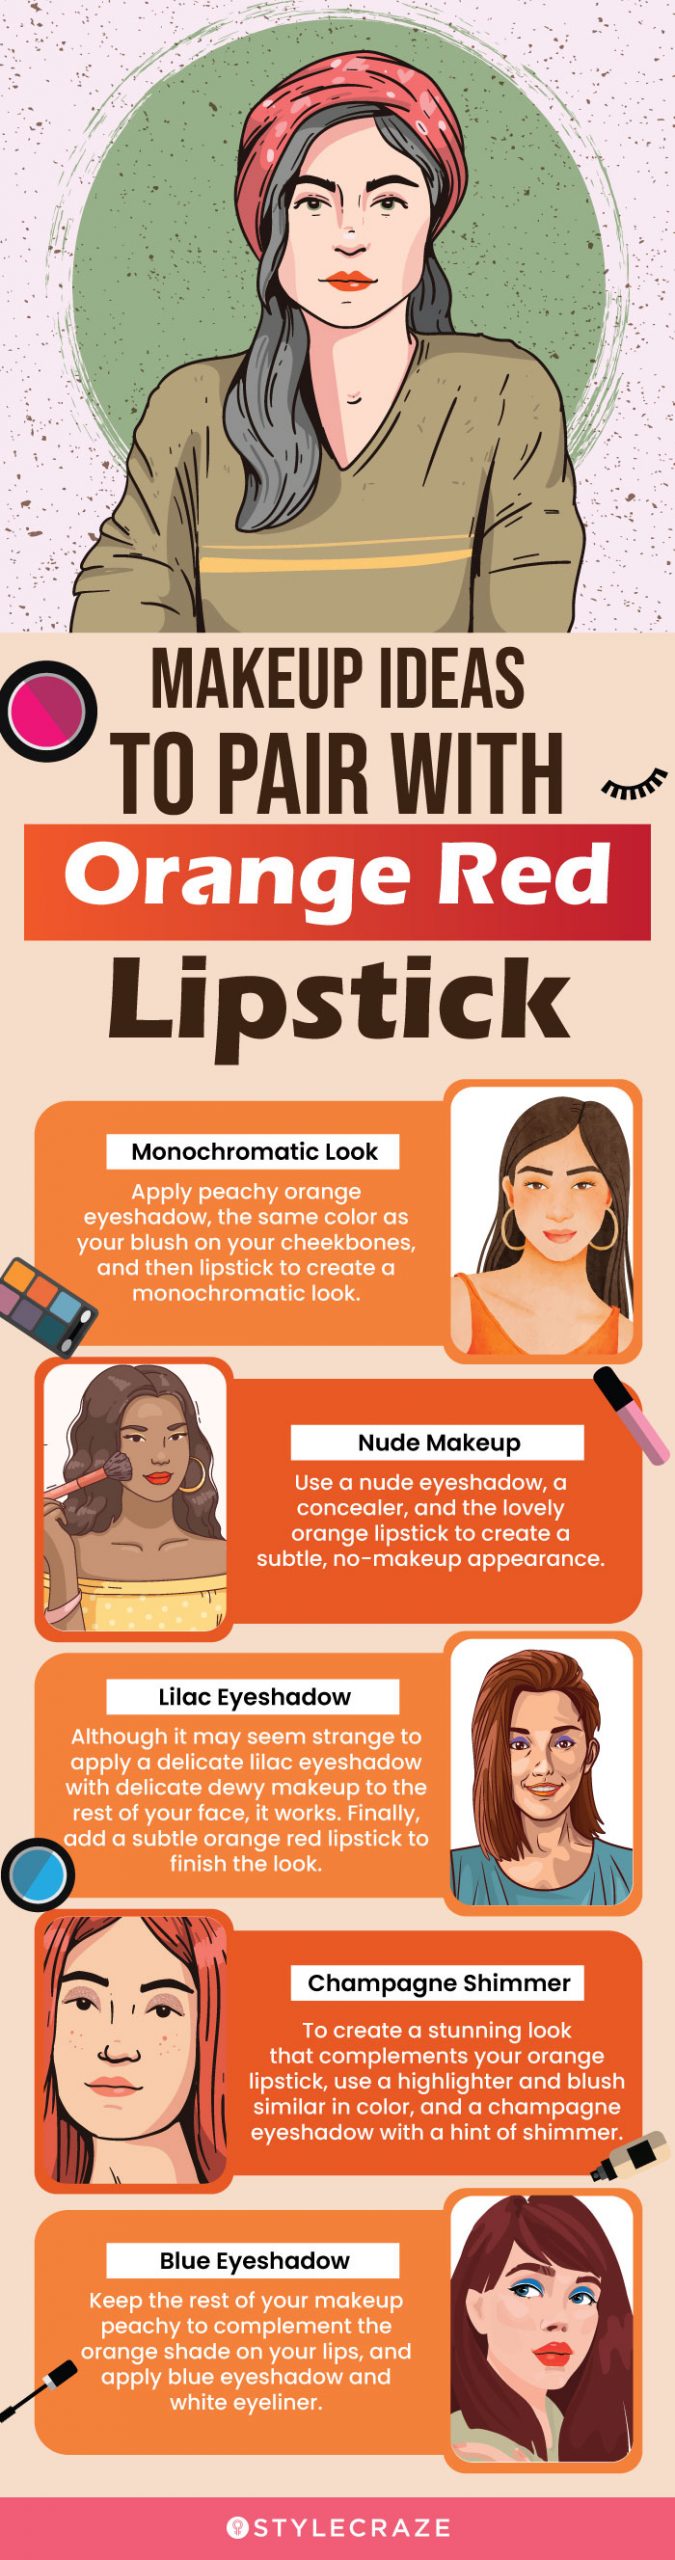 Makeup Ideas To Pair With Orange Lipstick (infographic)